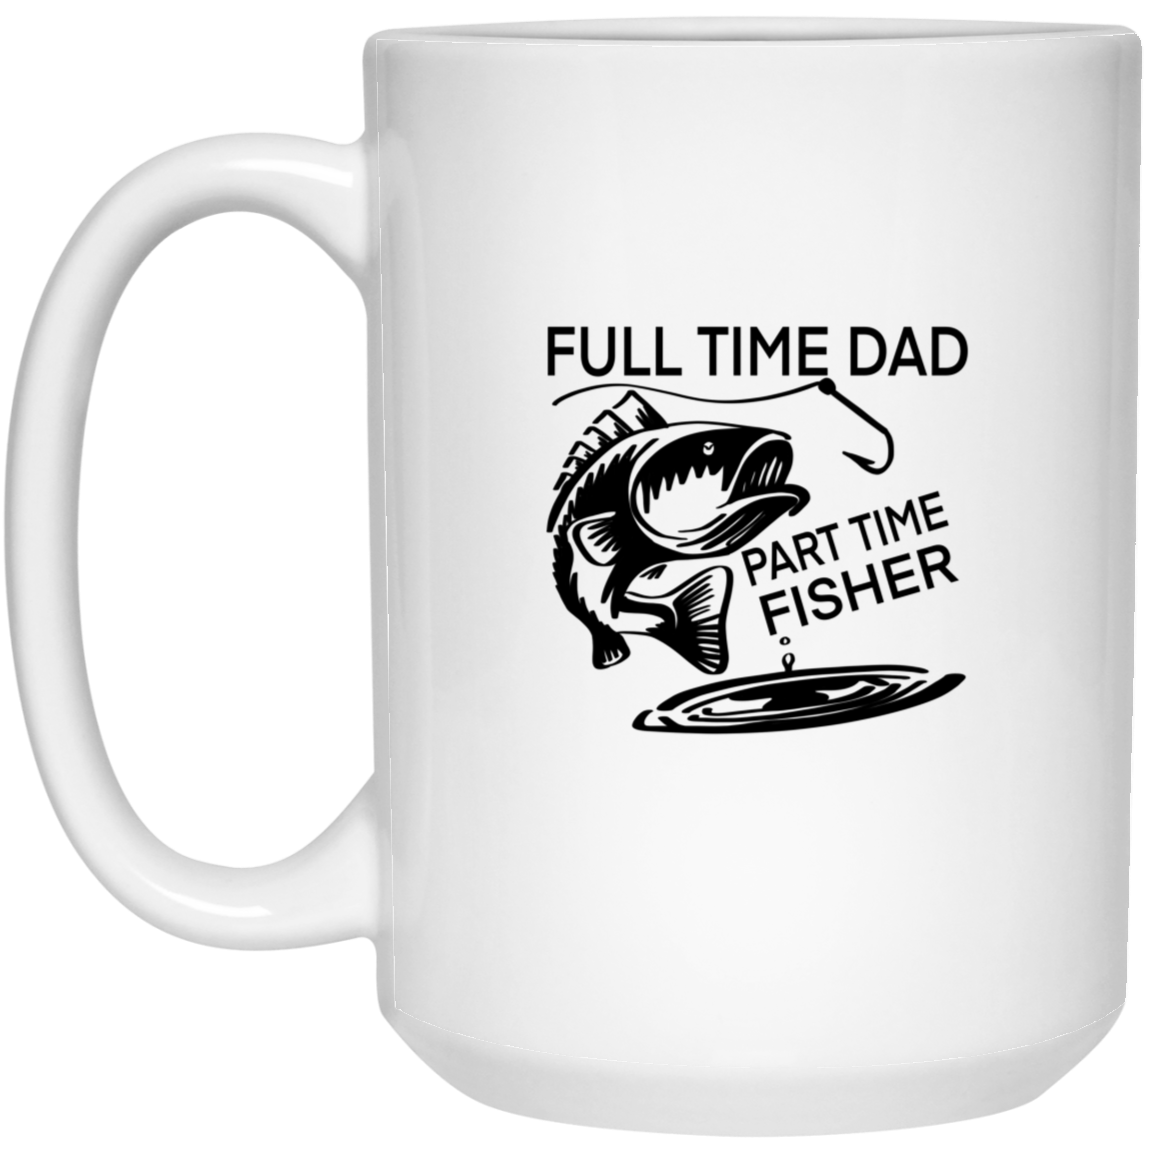 Full Time Dad Part Time Fisher | 15 oz. White Mug